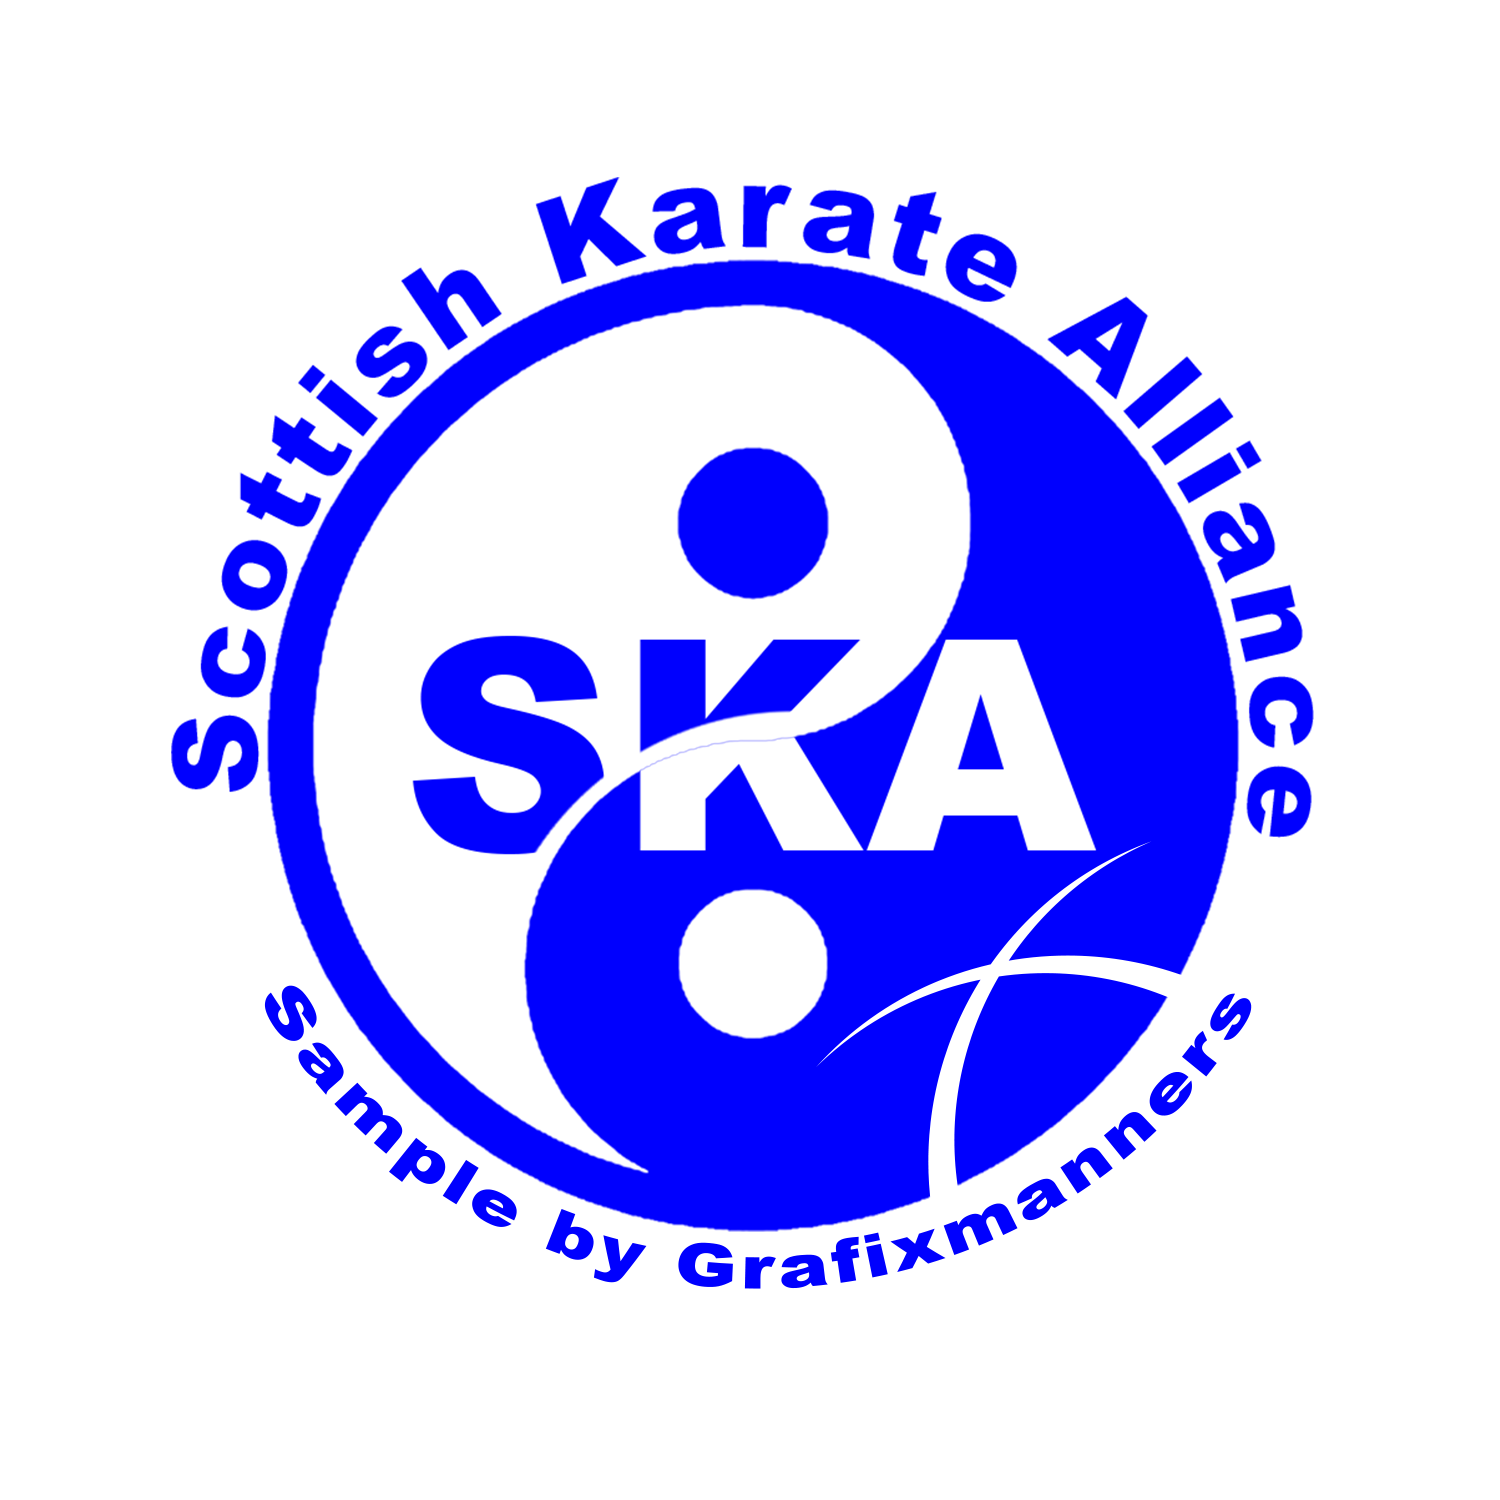 ska logo, scottish karate alliance, logo design, scottish logo, karate logo, retro logo design, blue and white, blue logo, ska logo, s logo, ka logo